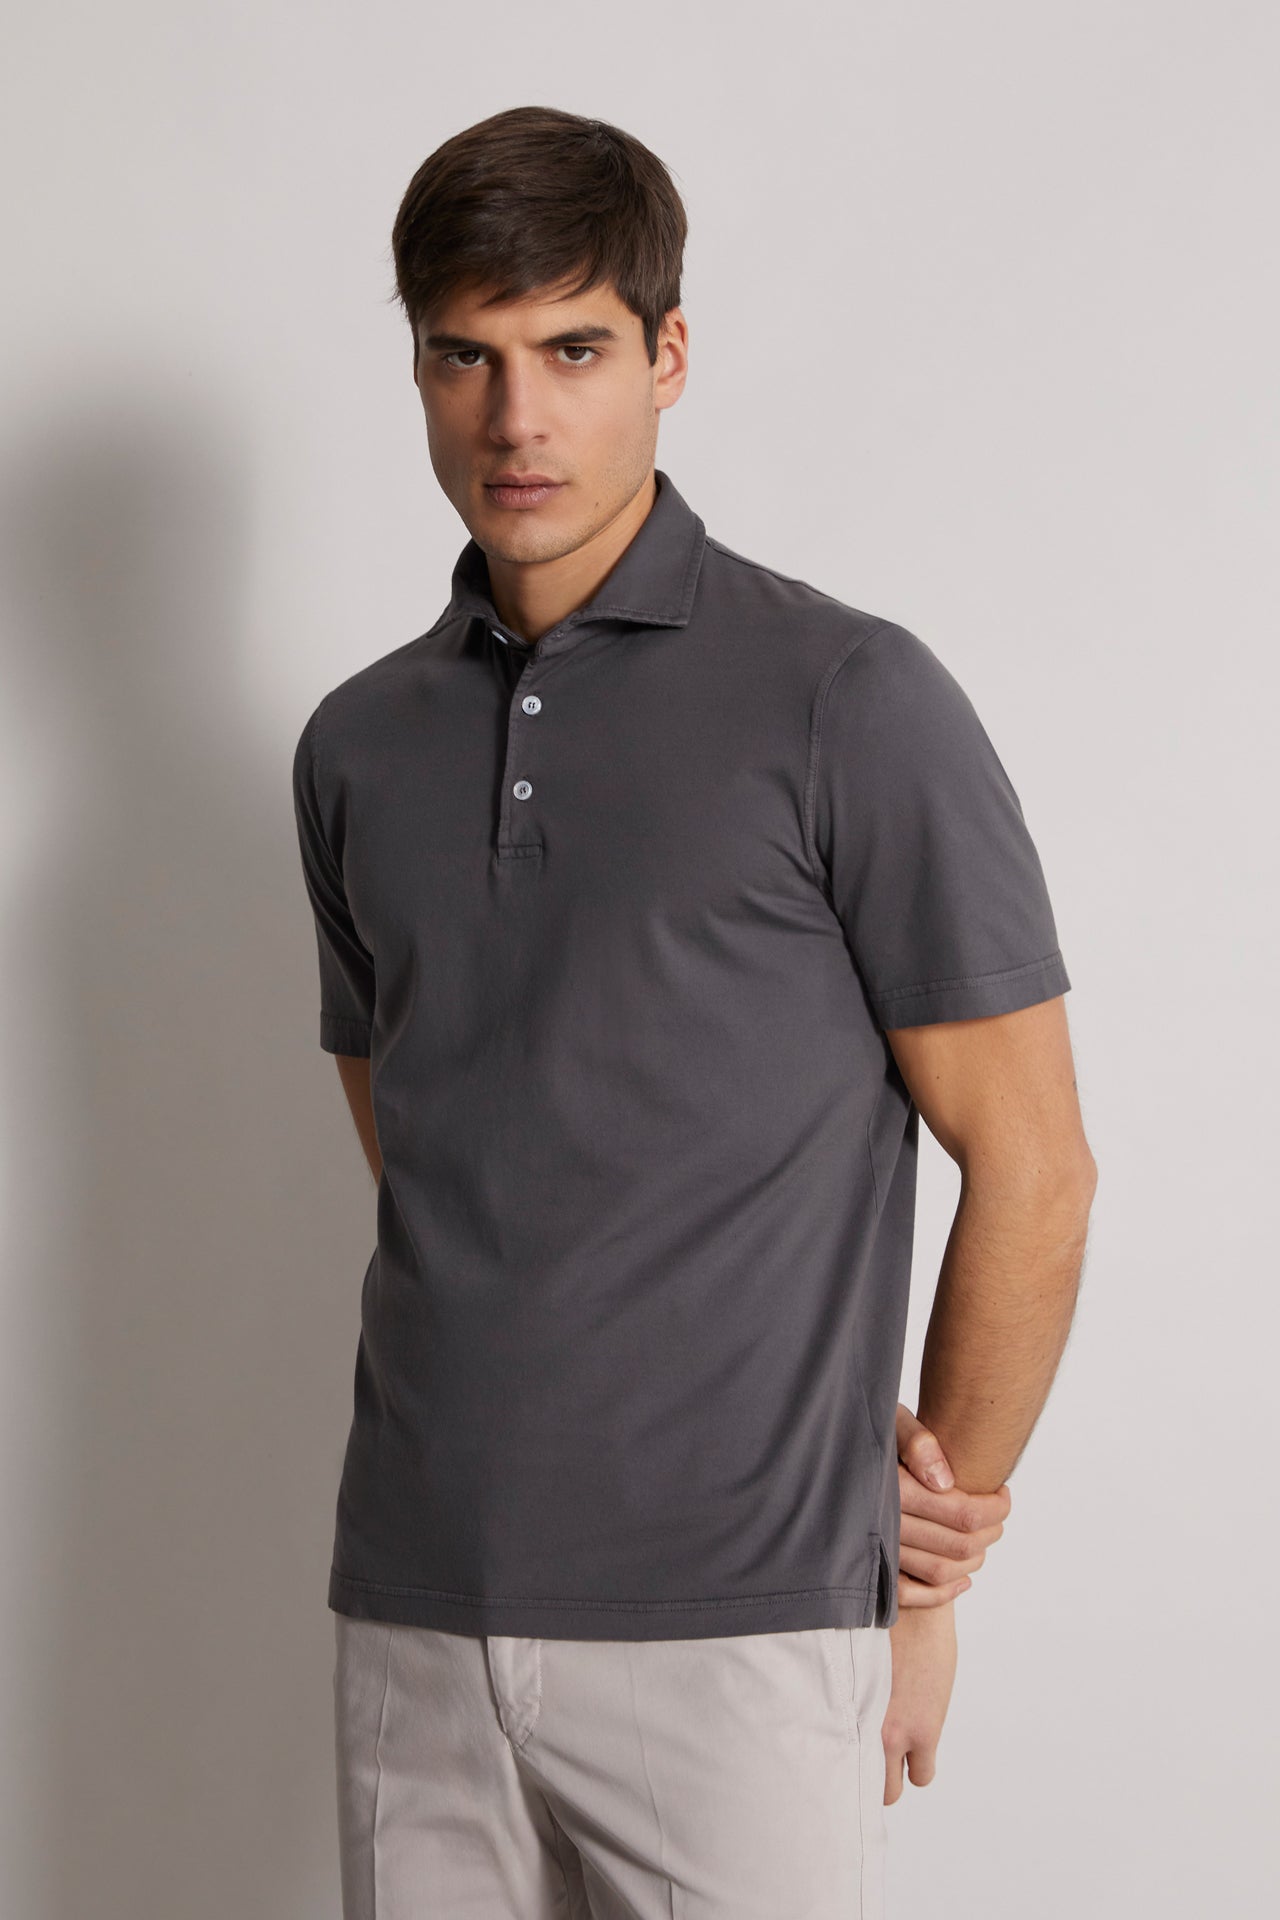 short sleeves polo t-shirt dark grey - front view